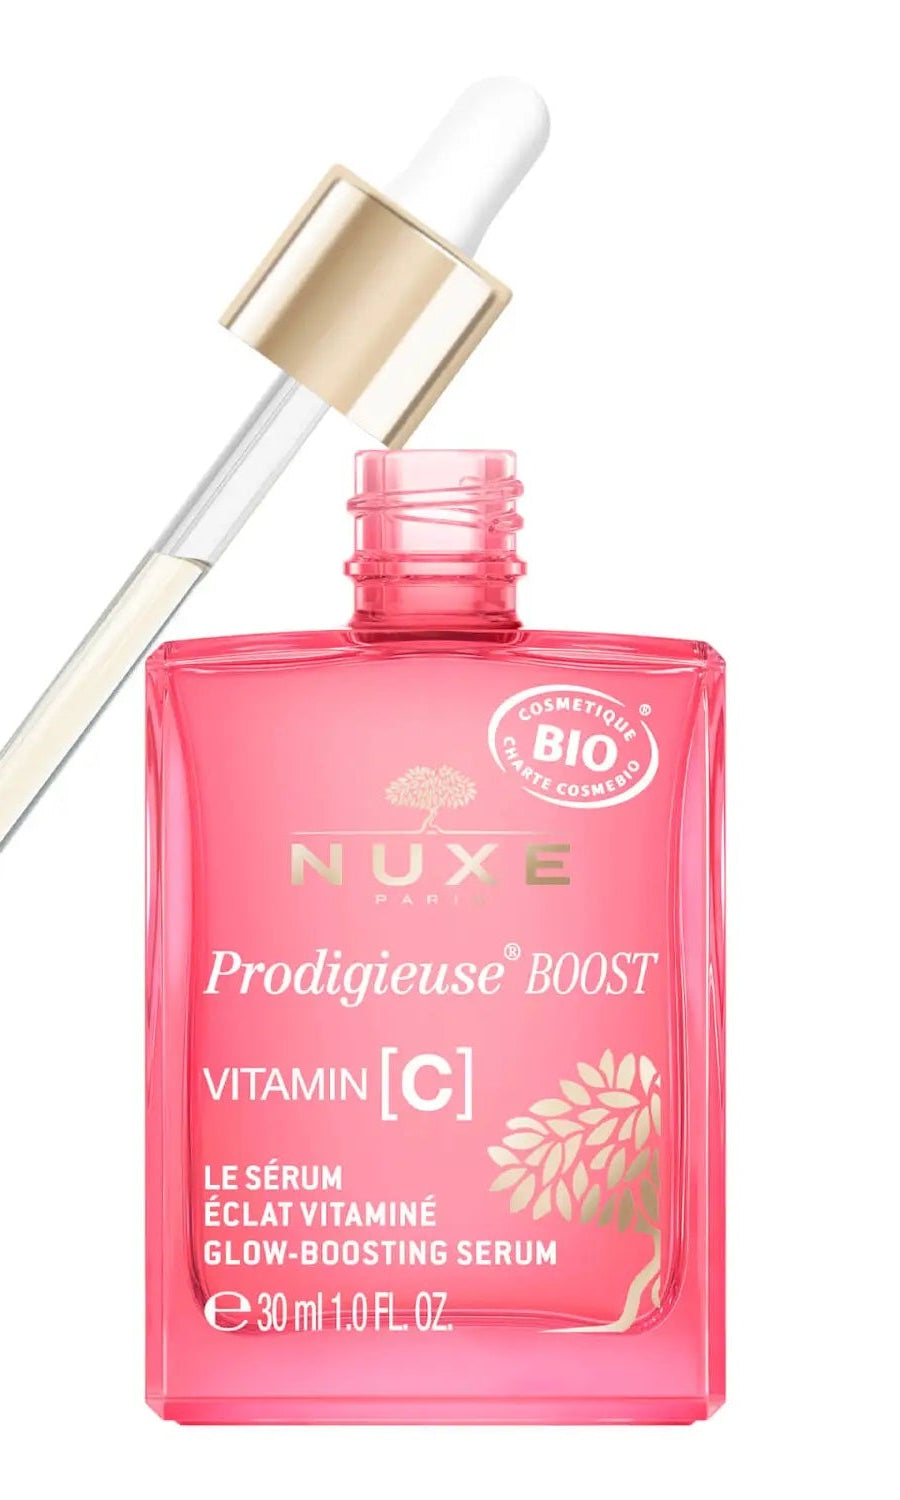 Nuxe Prodigieuse Boost Vitamin C Glow-Boosting Serum 30ml Grace Beauty